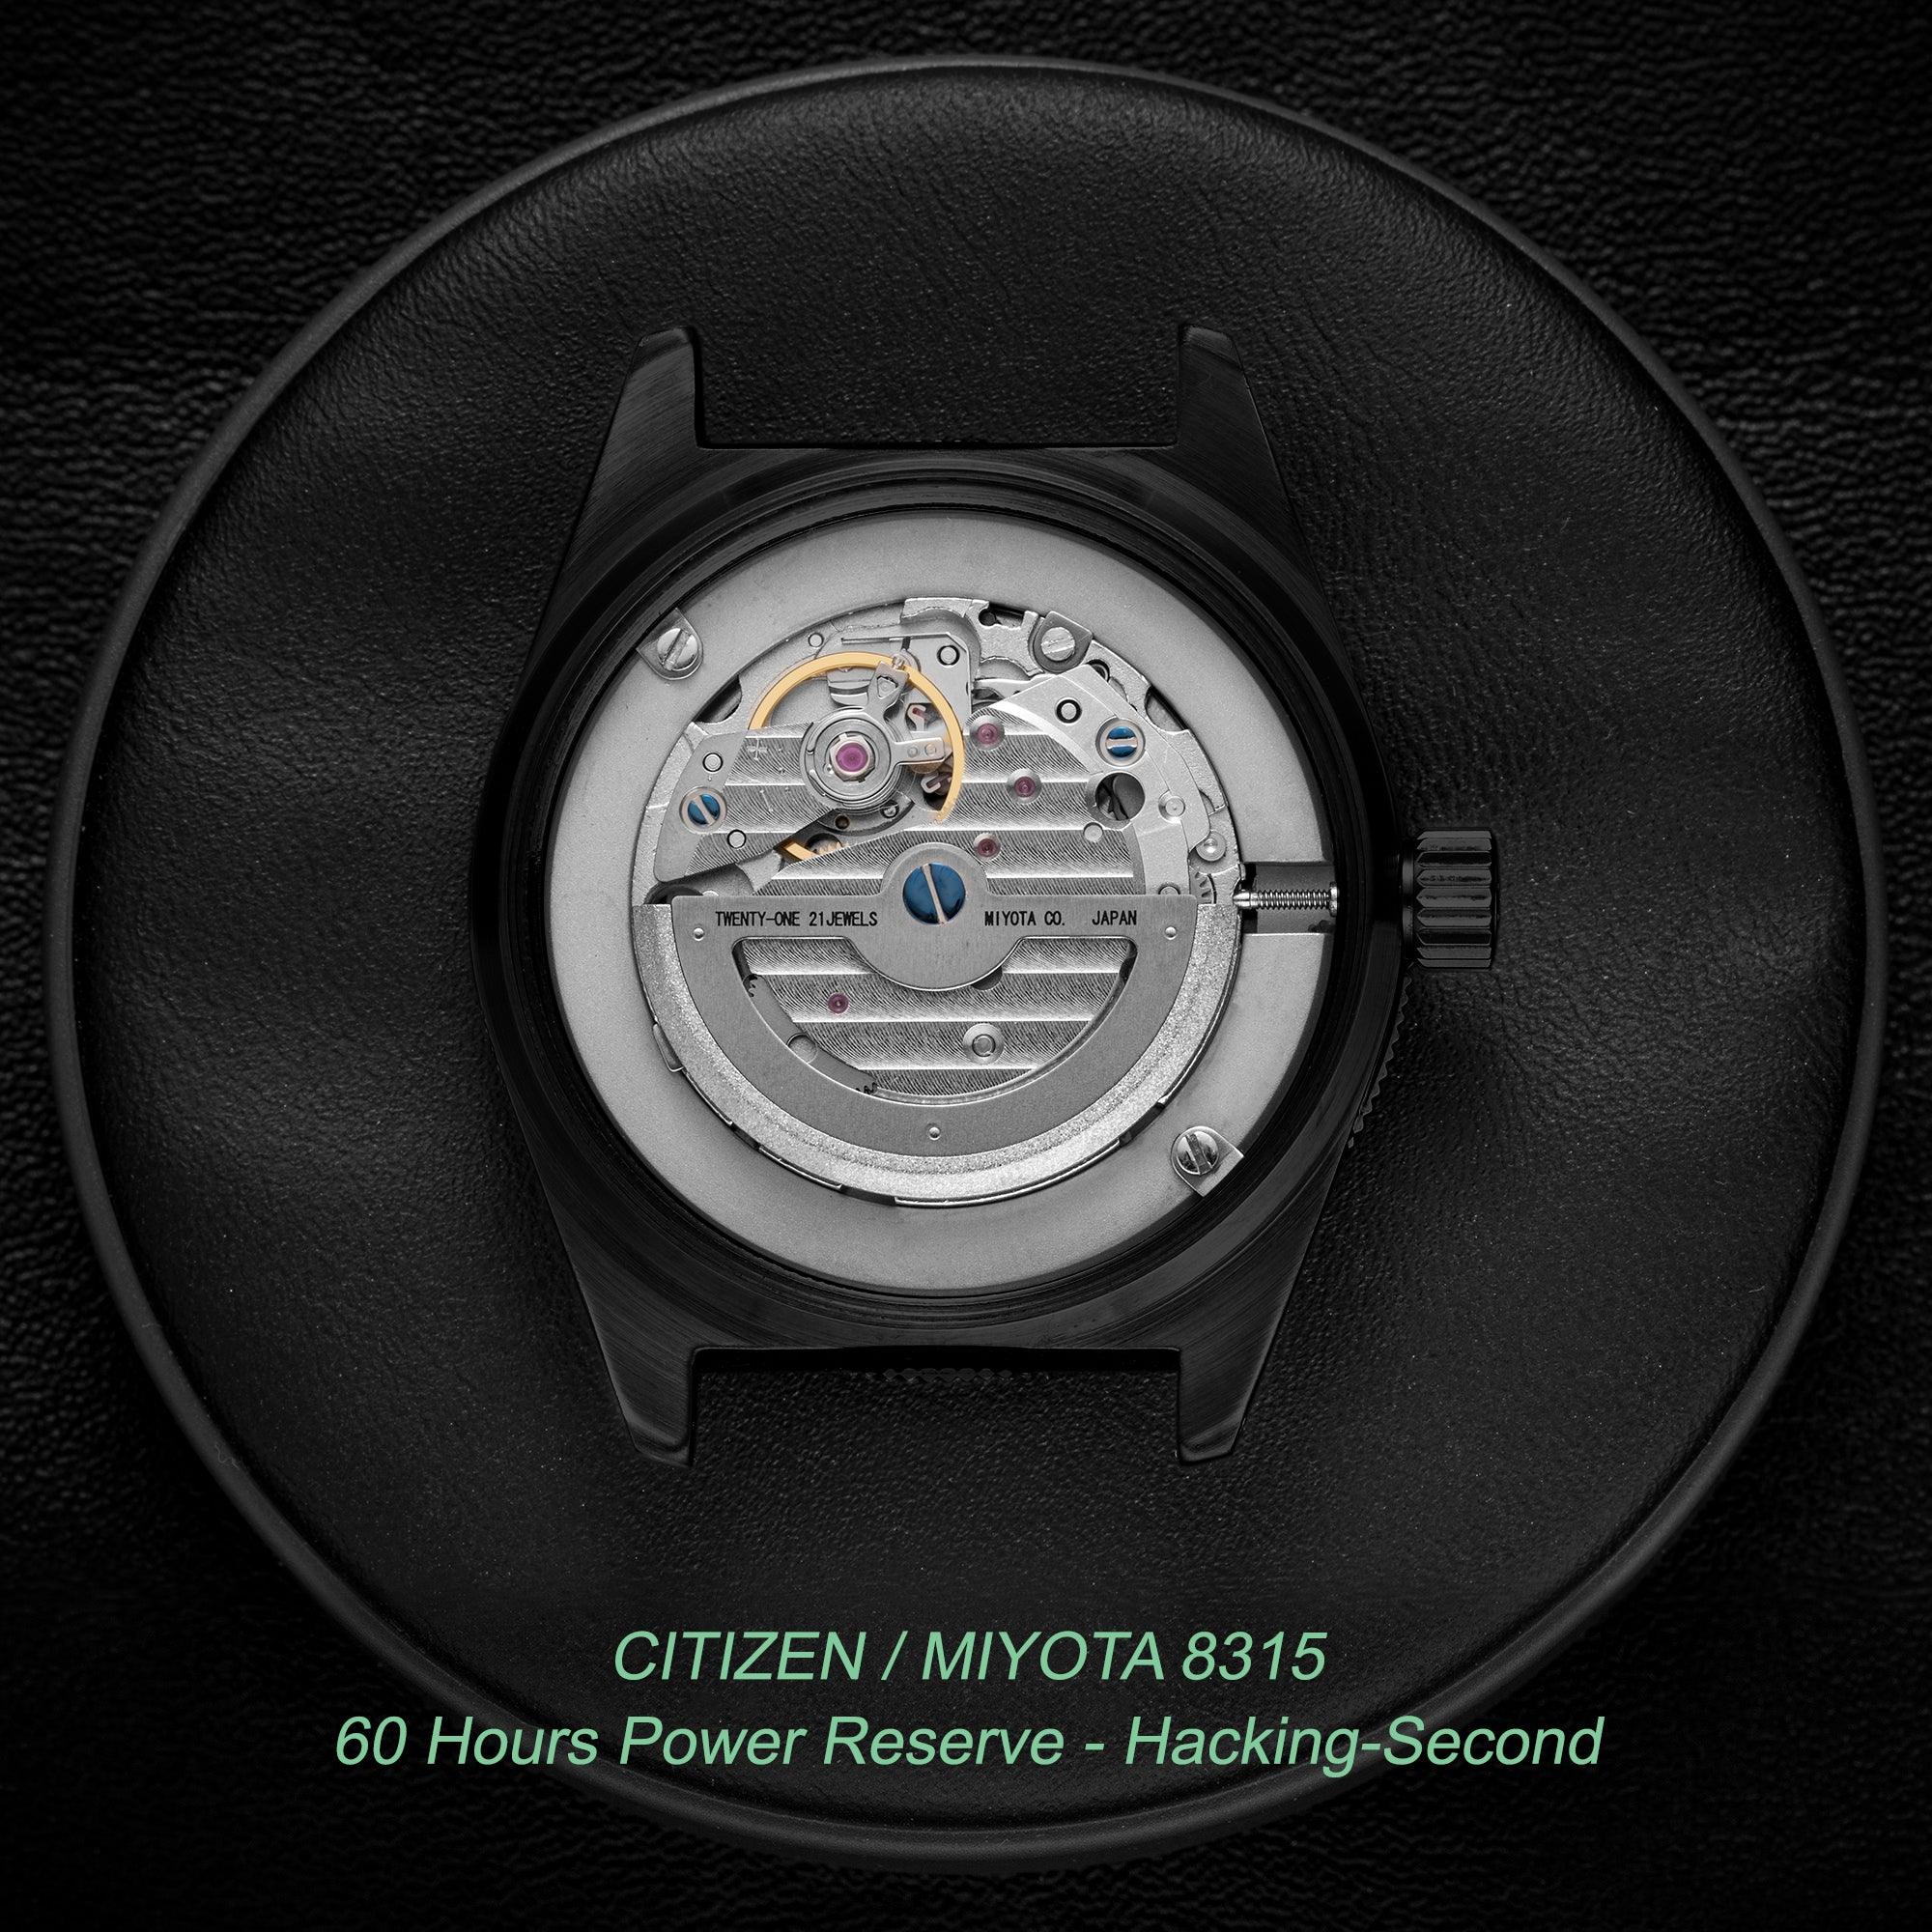 Grand Prix WT Professional Racing Watch - Black PVD - René Bonnet Djet 1962 Limited Edition